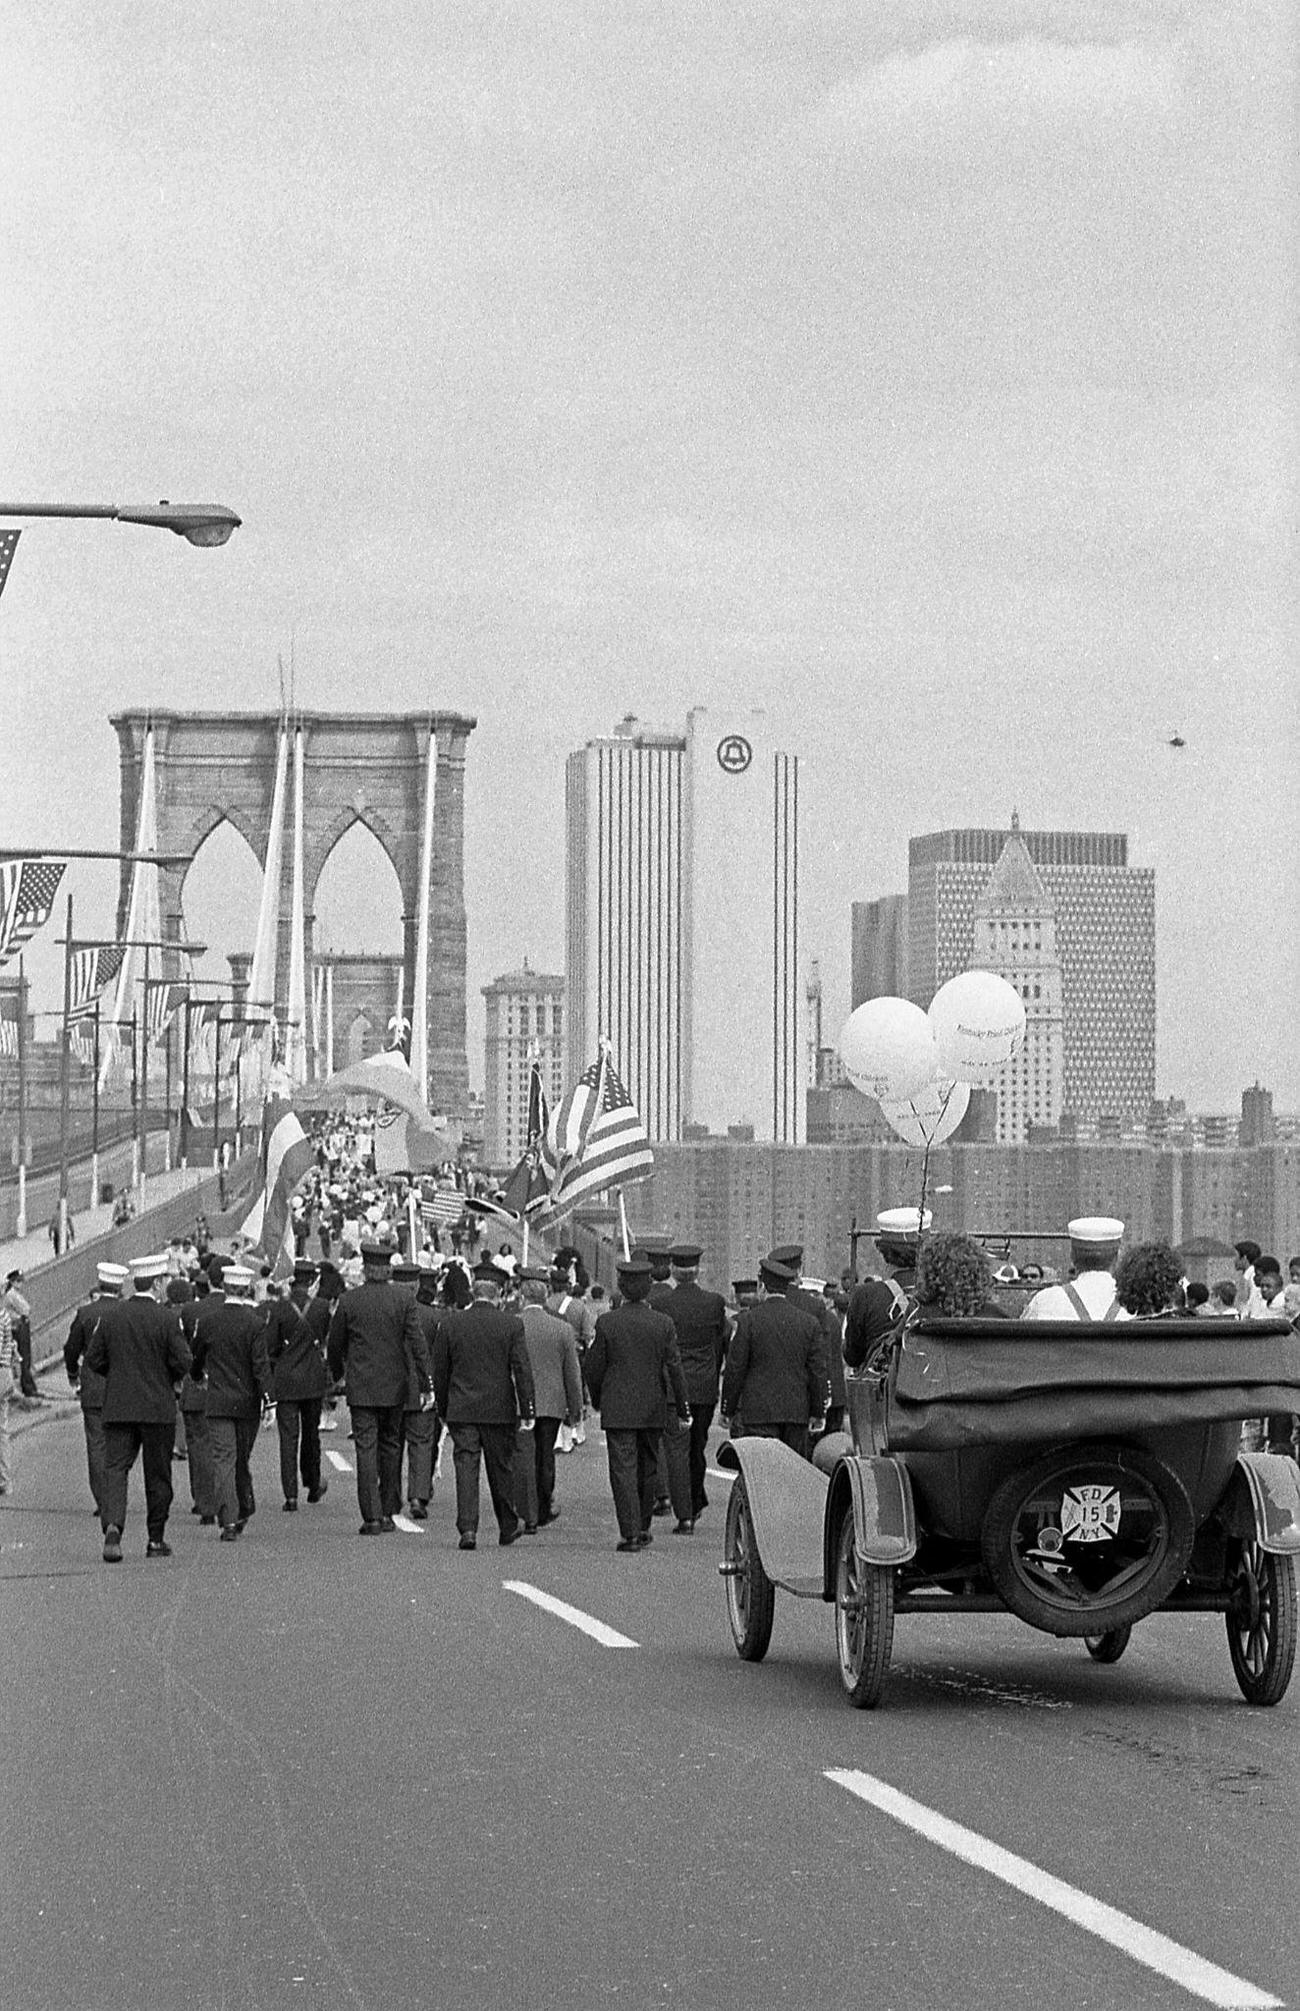 Uniformed Marchers And Antique Car On Brooklyn Bridge, 1983